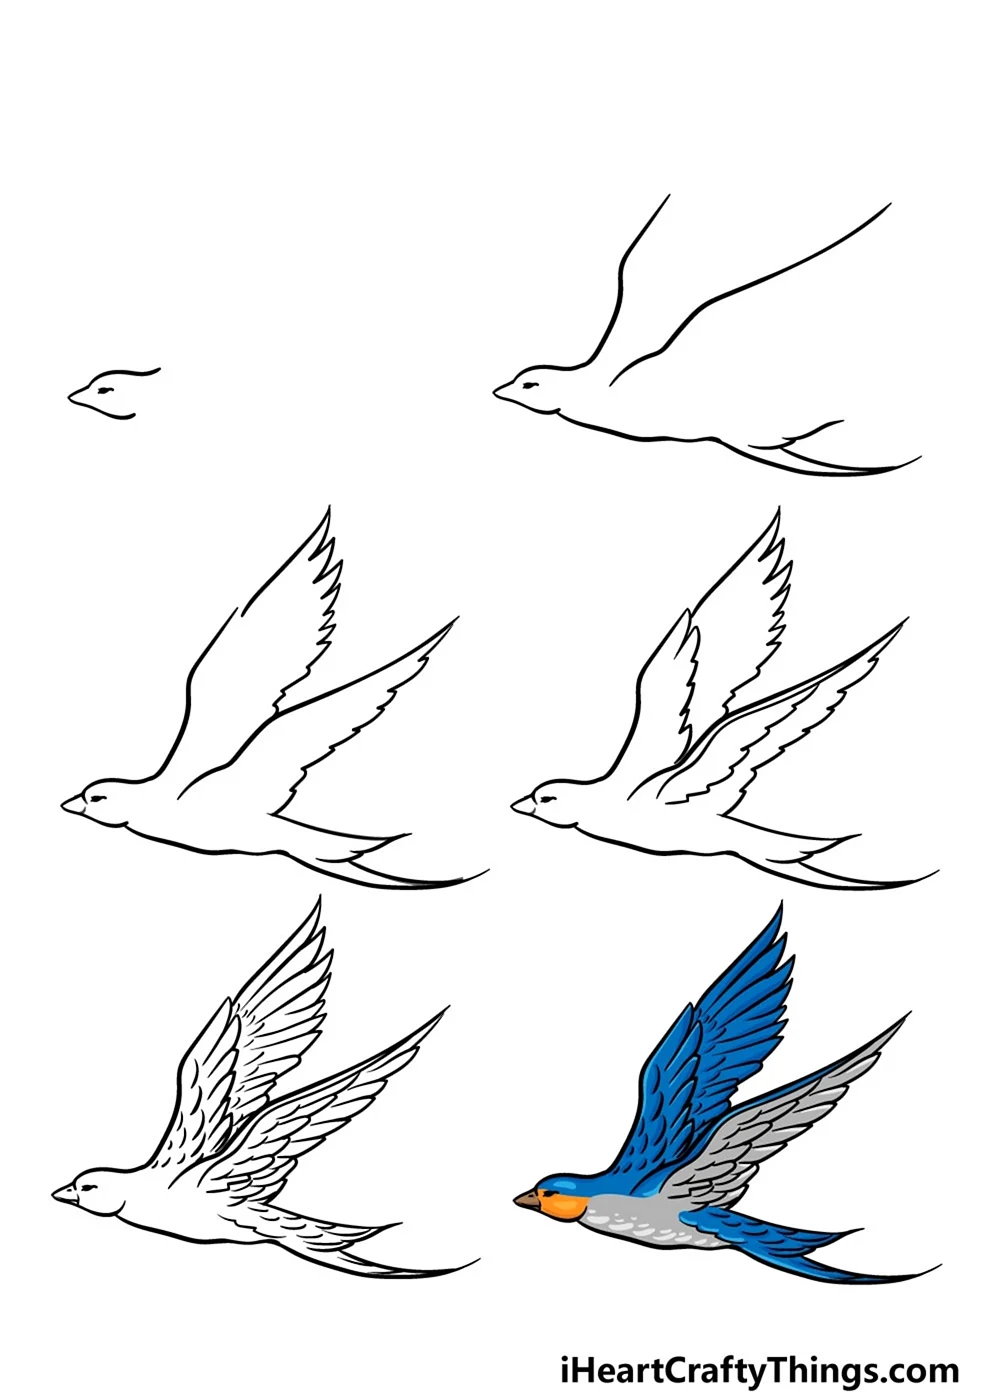 Нарисовать птицу. Для срисовки